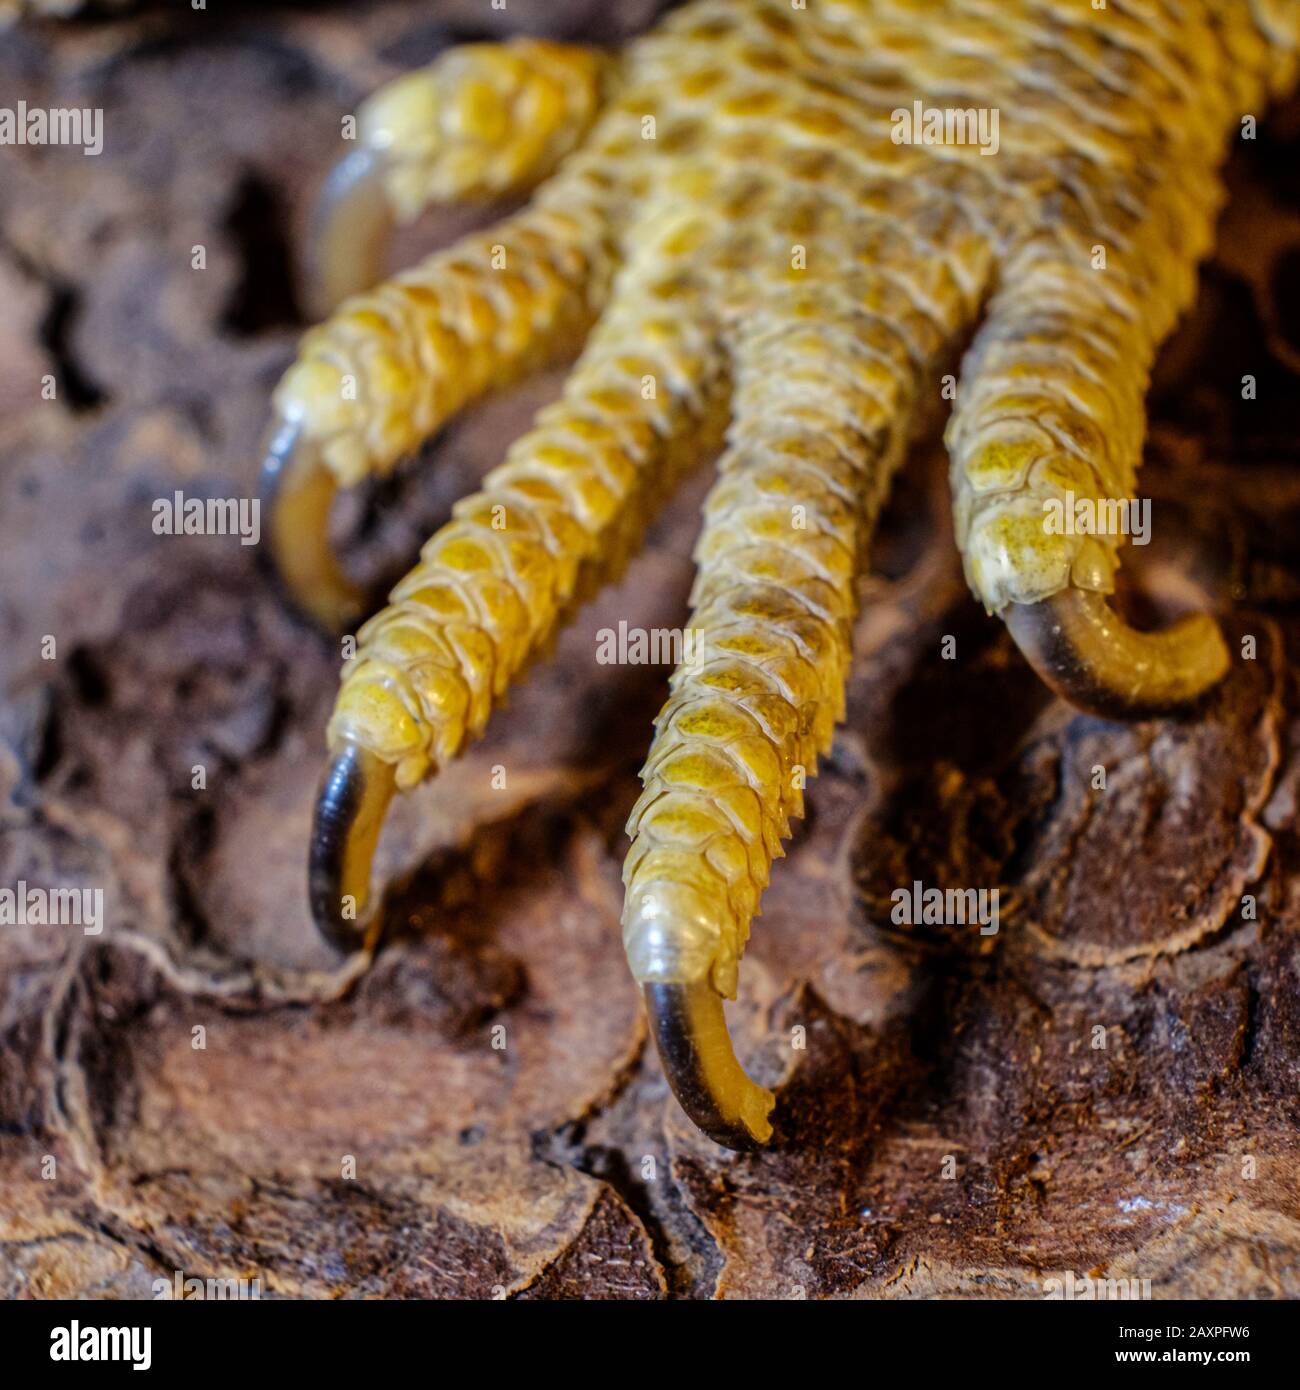 A Bearded Dragon Lizard Pet Close Up Stock Photo Alamy,1st Anniversary Ideas In Lockdown